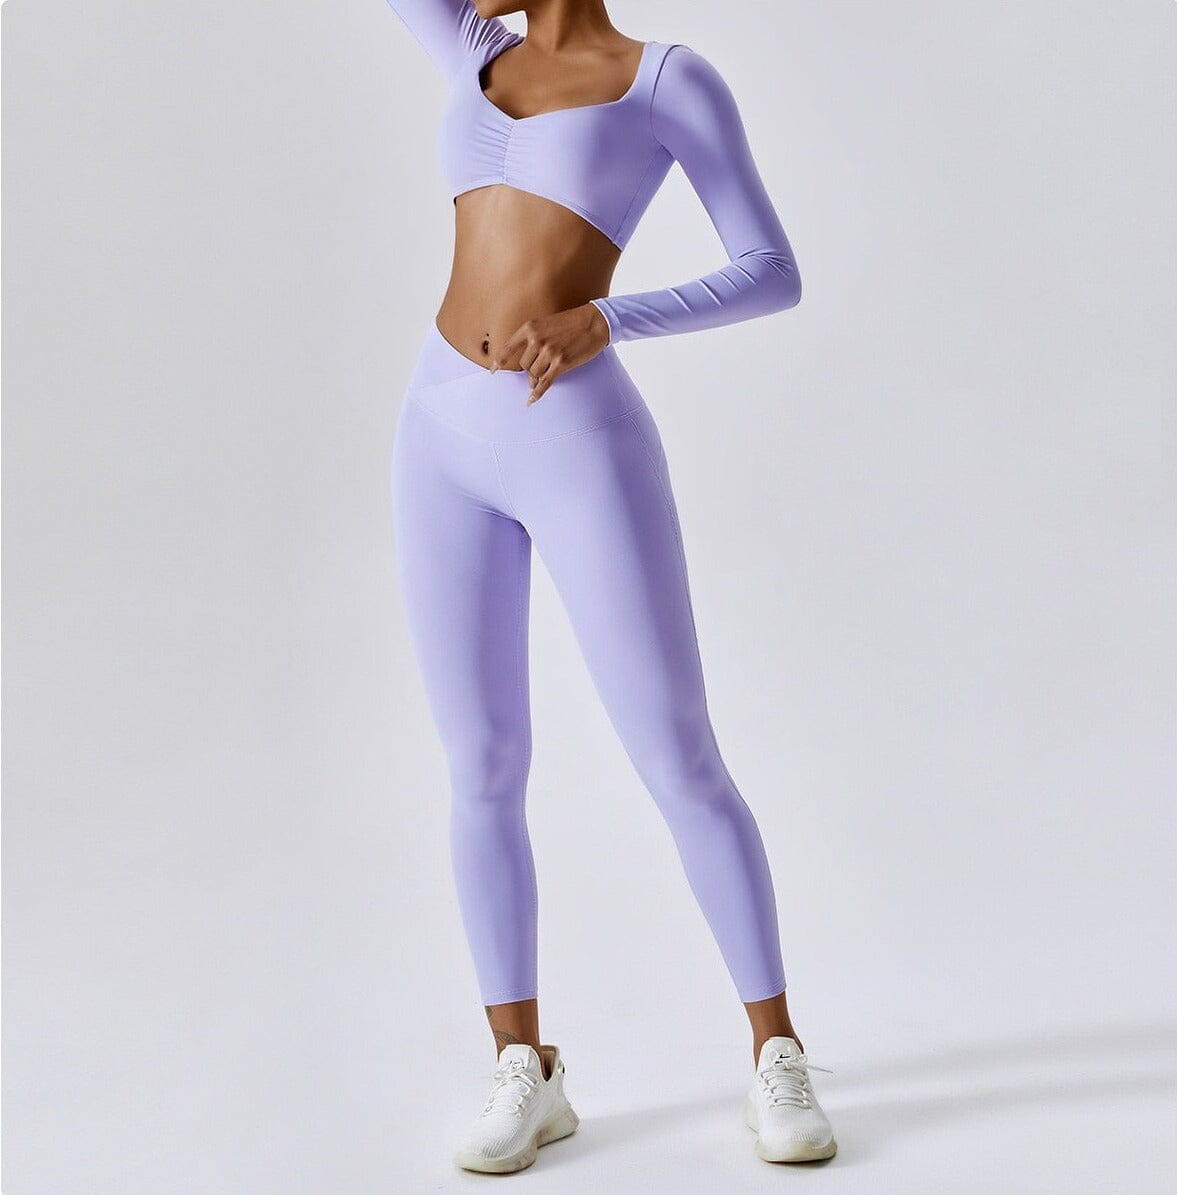 Goddess Shirt Gym Set - Leggings + Top Sets Starlethics Lilac S 